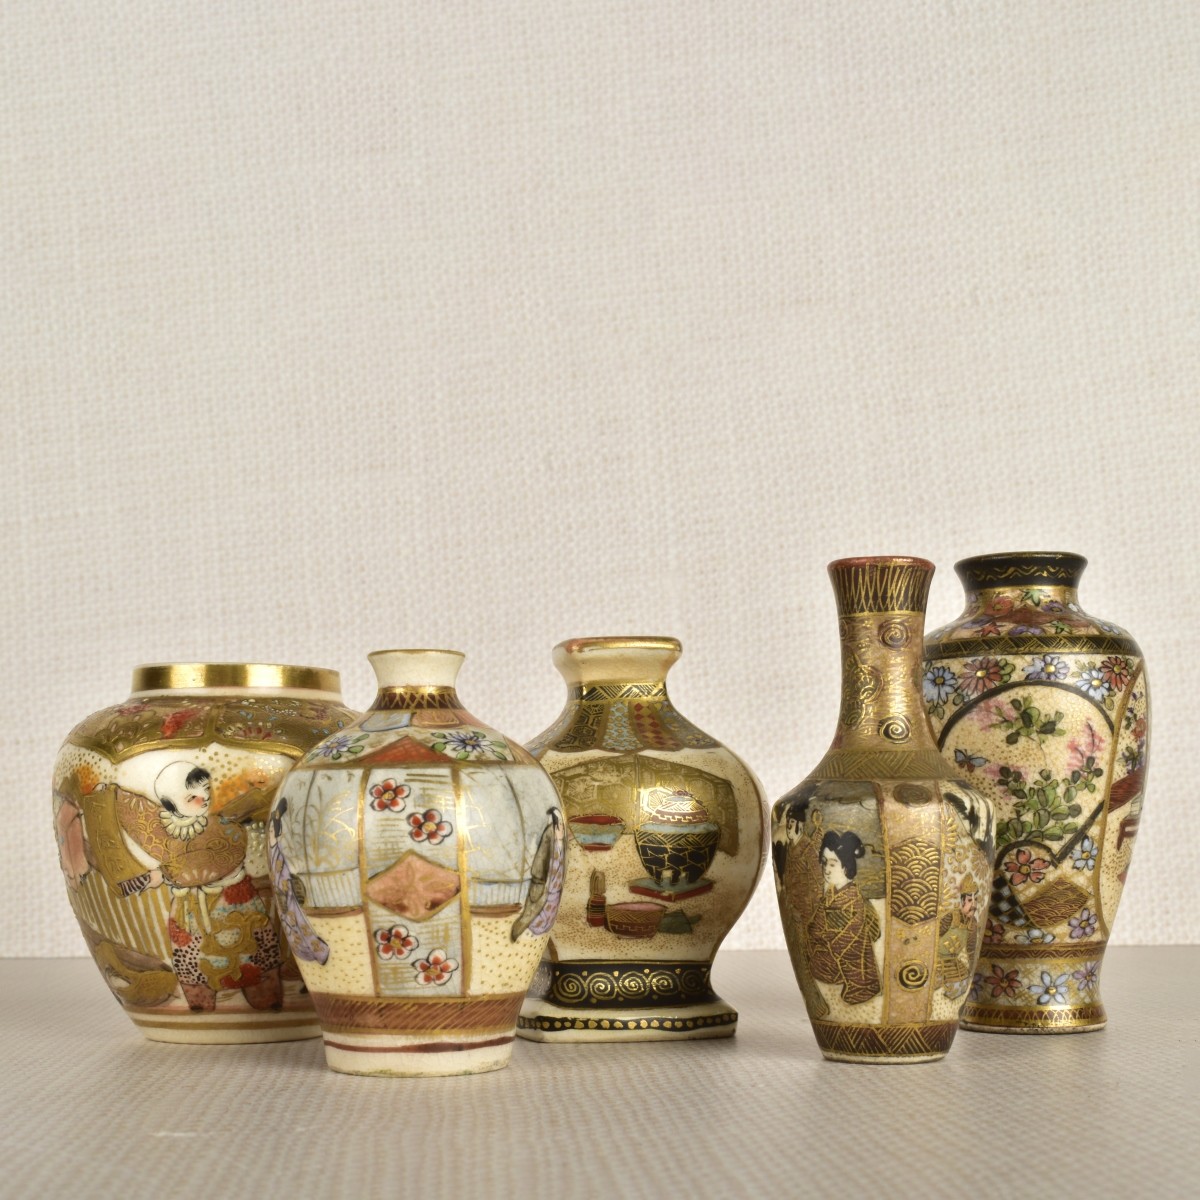 Group of Miniature Satsuma Vases